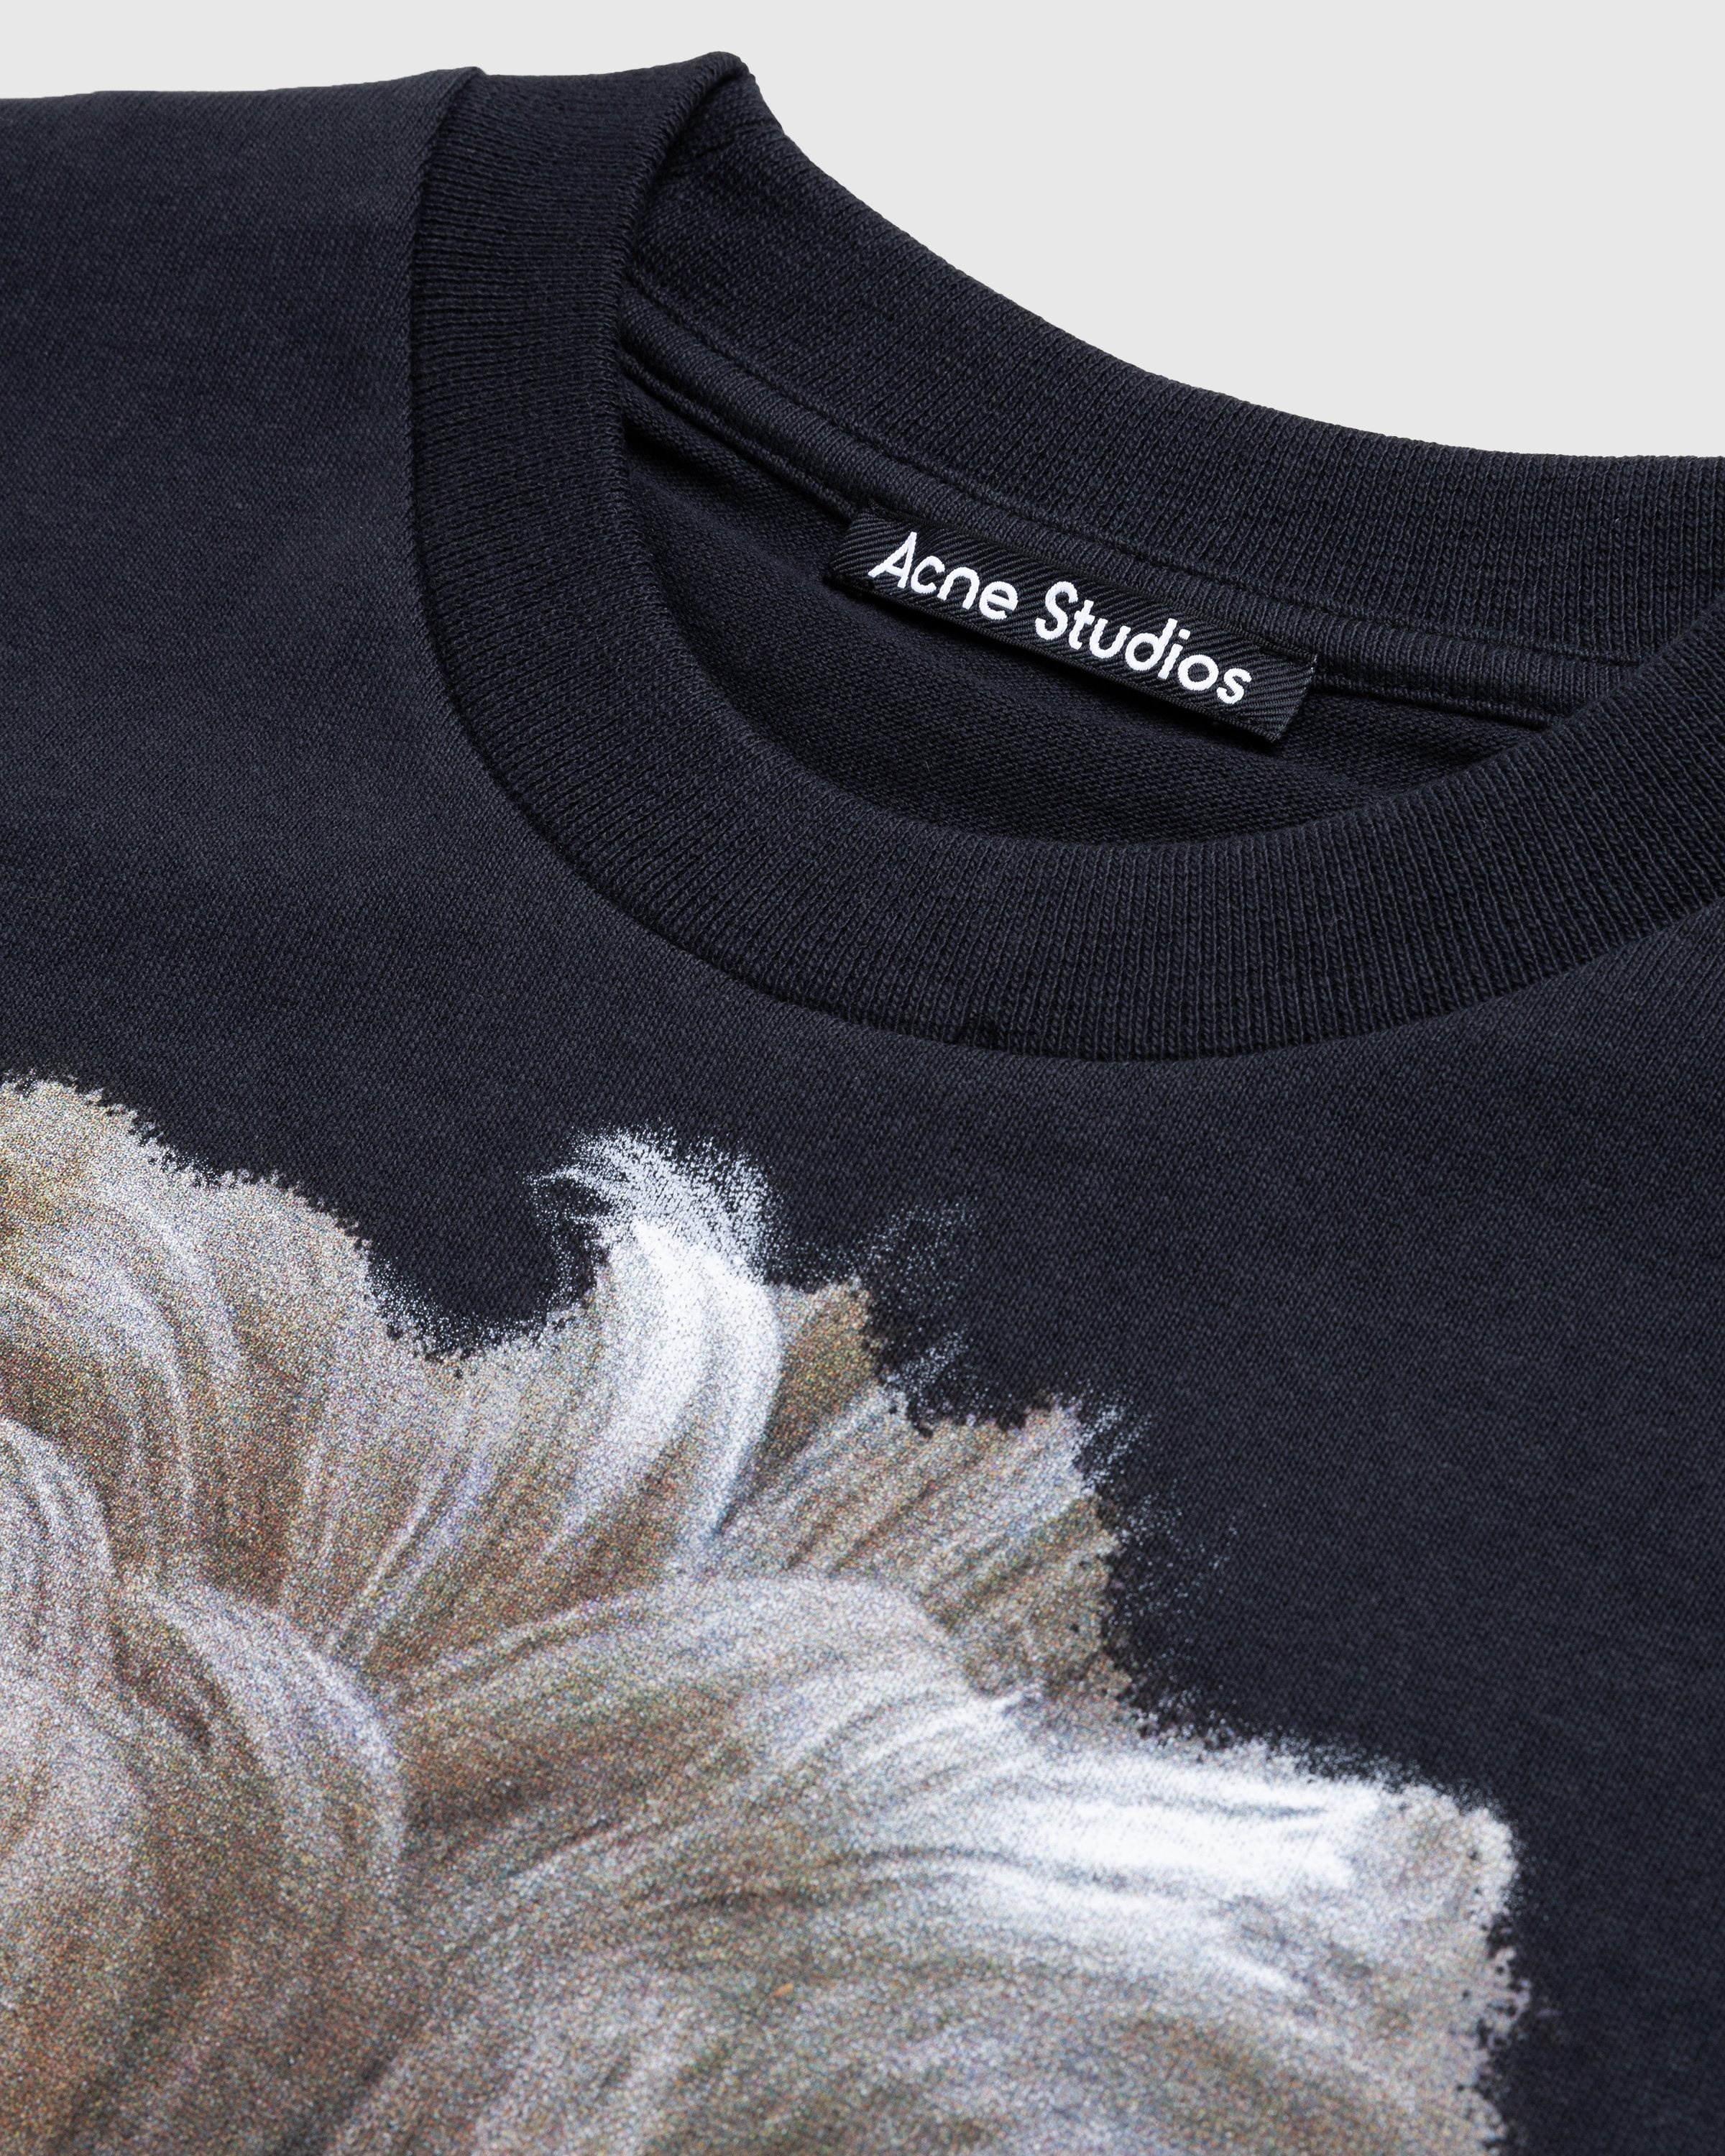 Acne Studios – Printed Dog T-Shirt Faded Black | Highsnobiety Shop